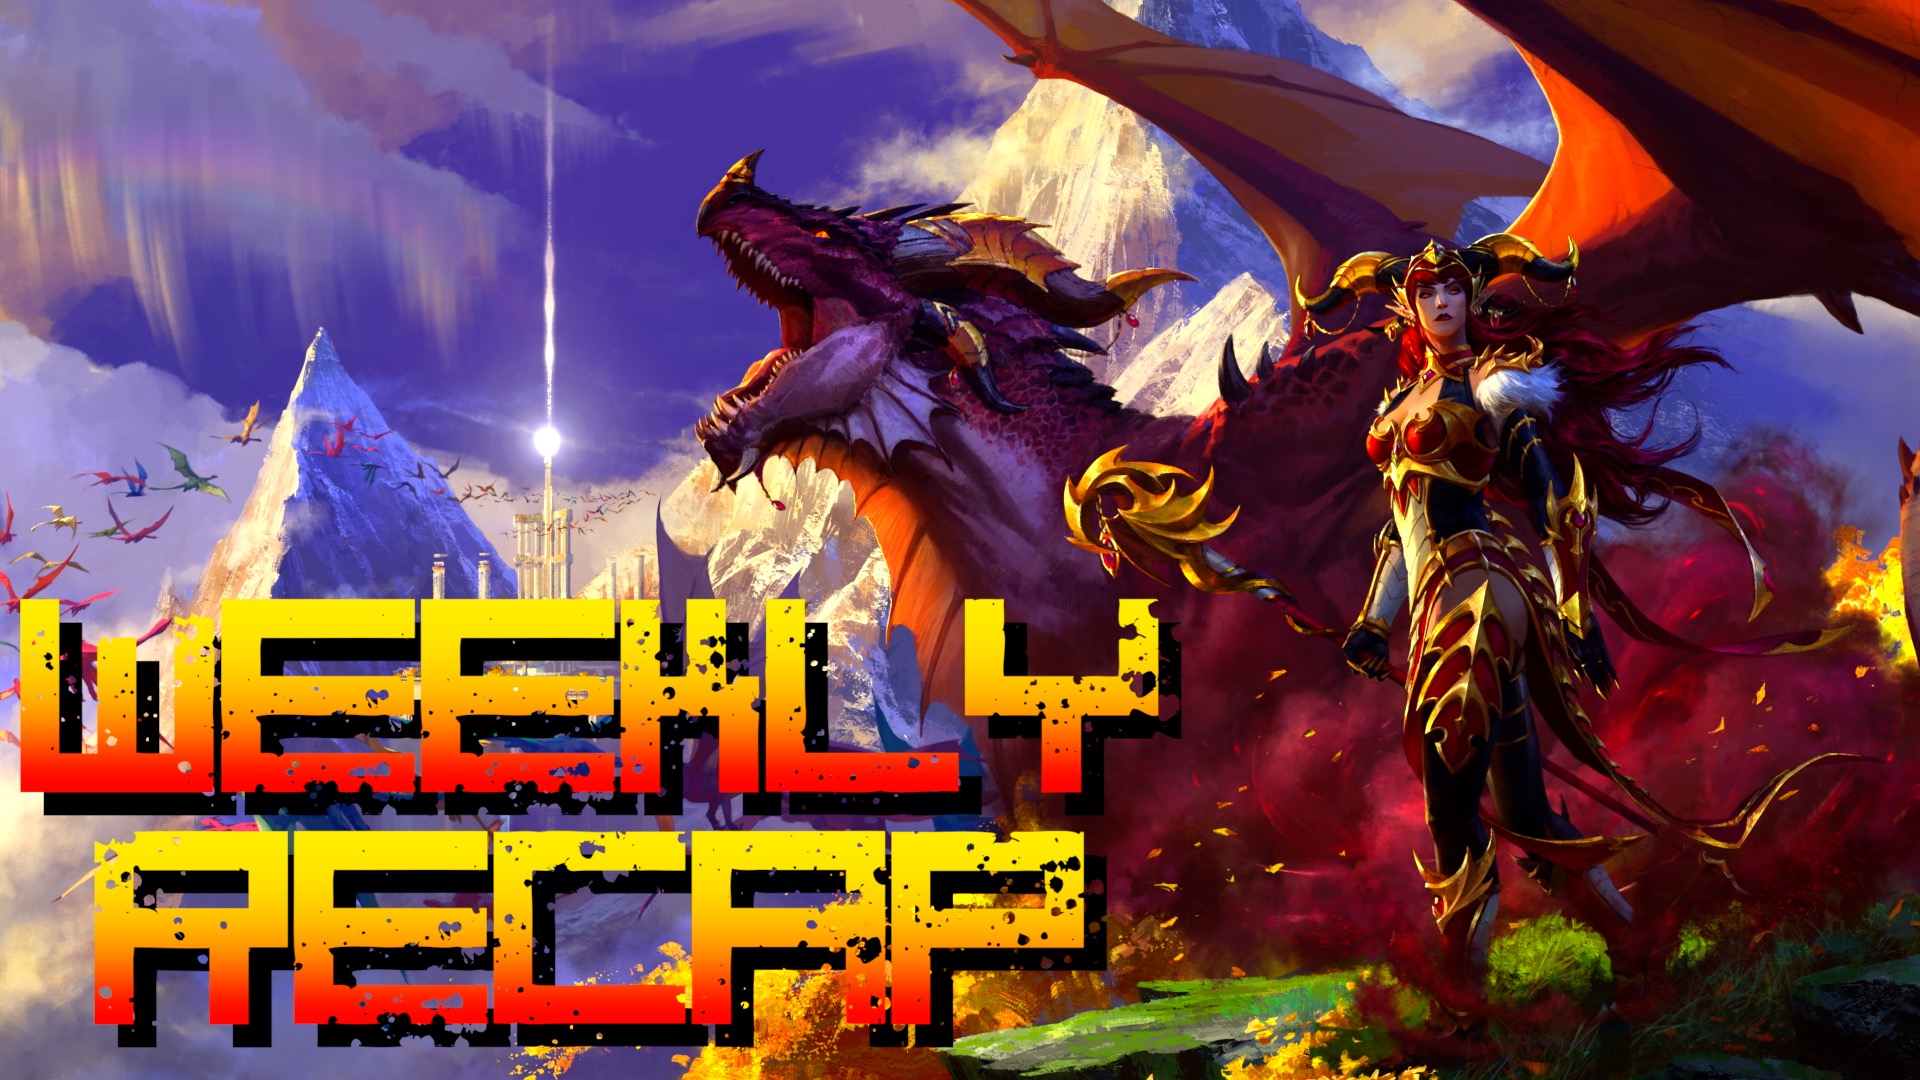 Weekly Recap (Art: World of Warcraft)